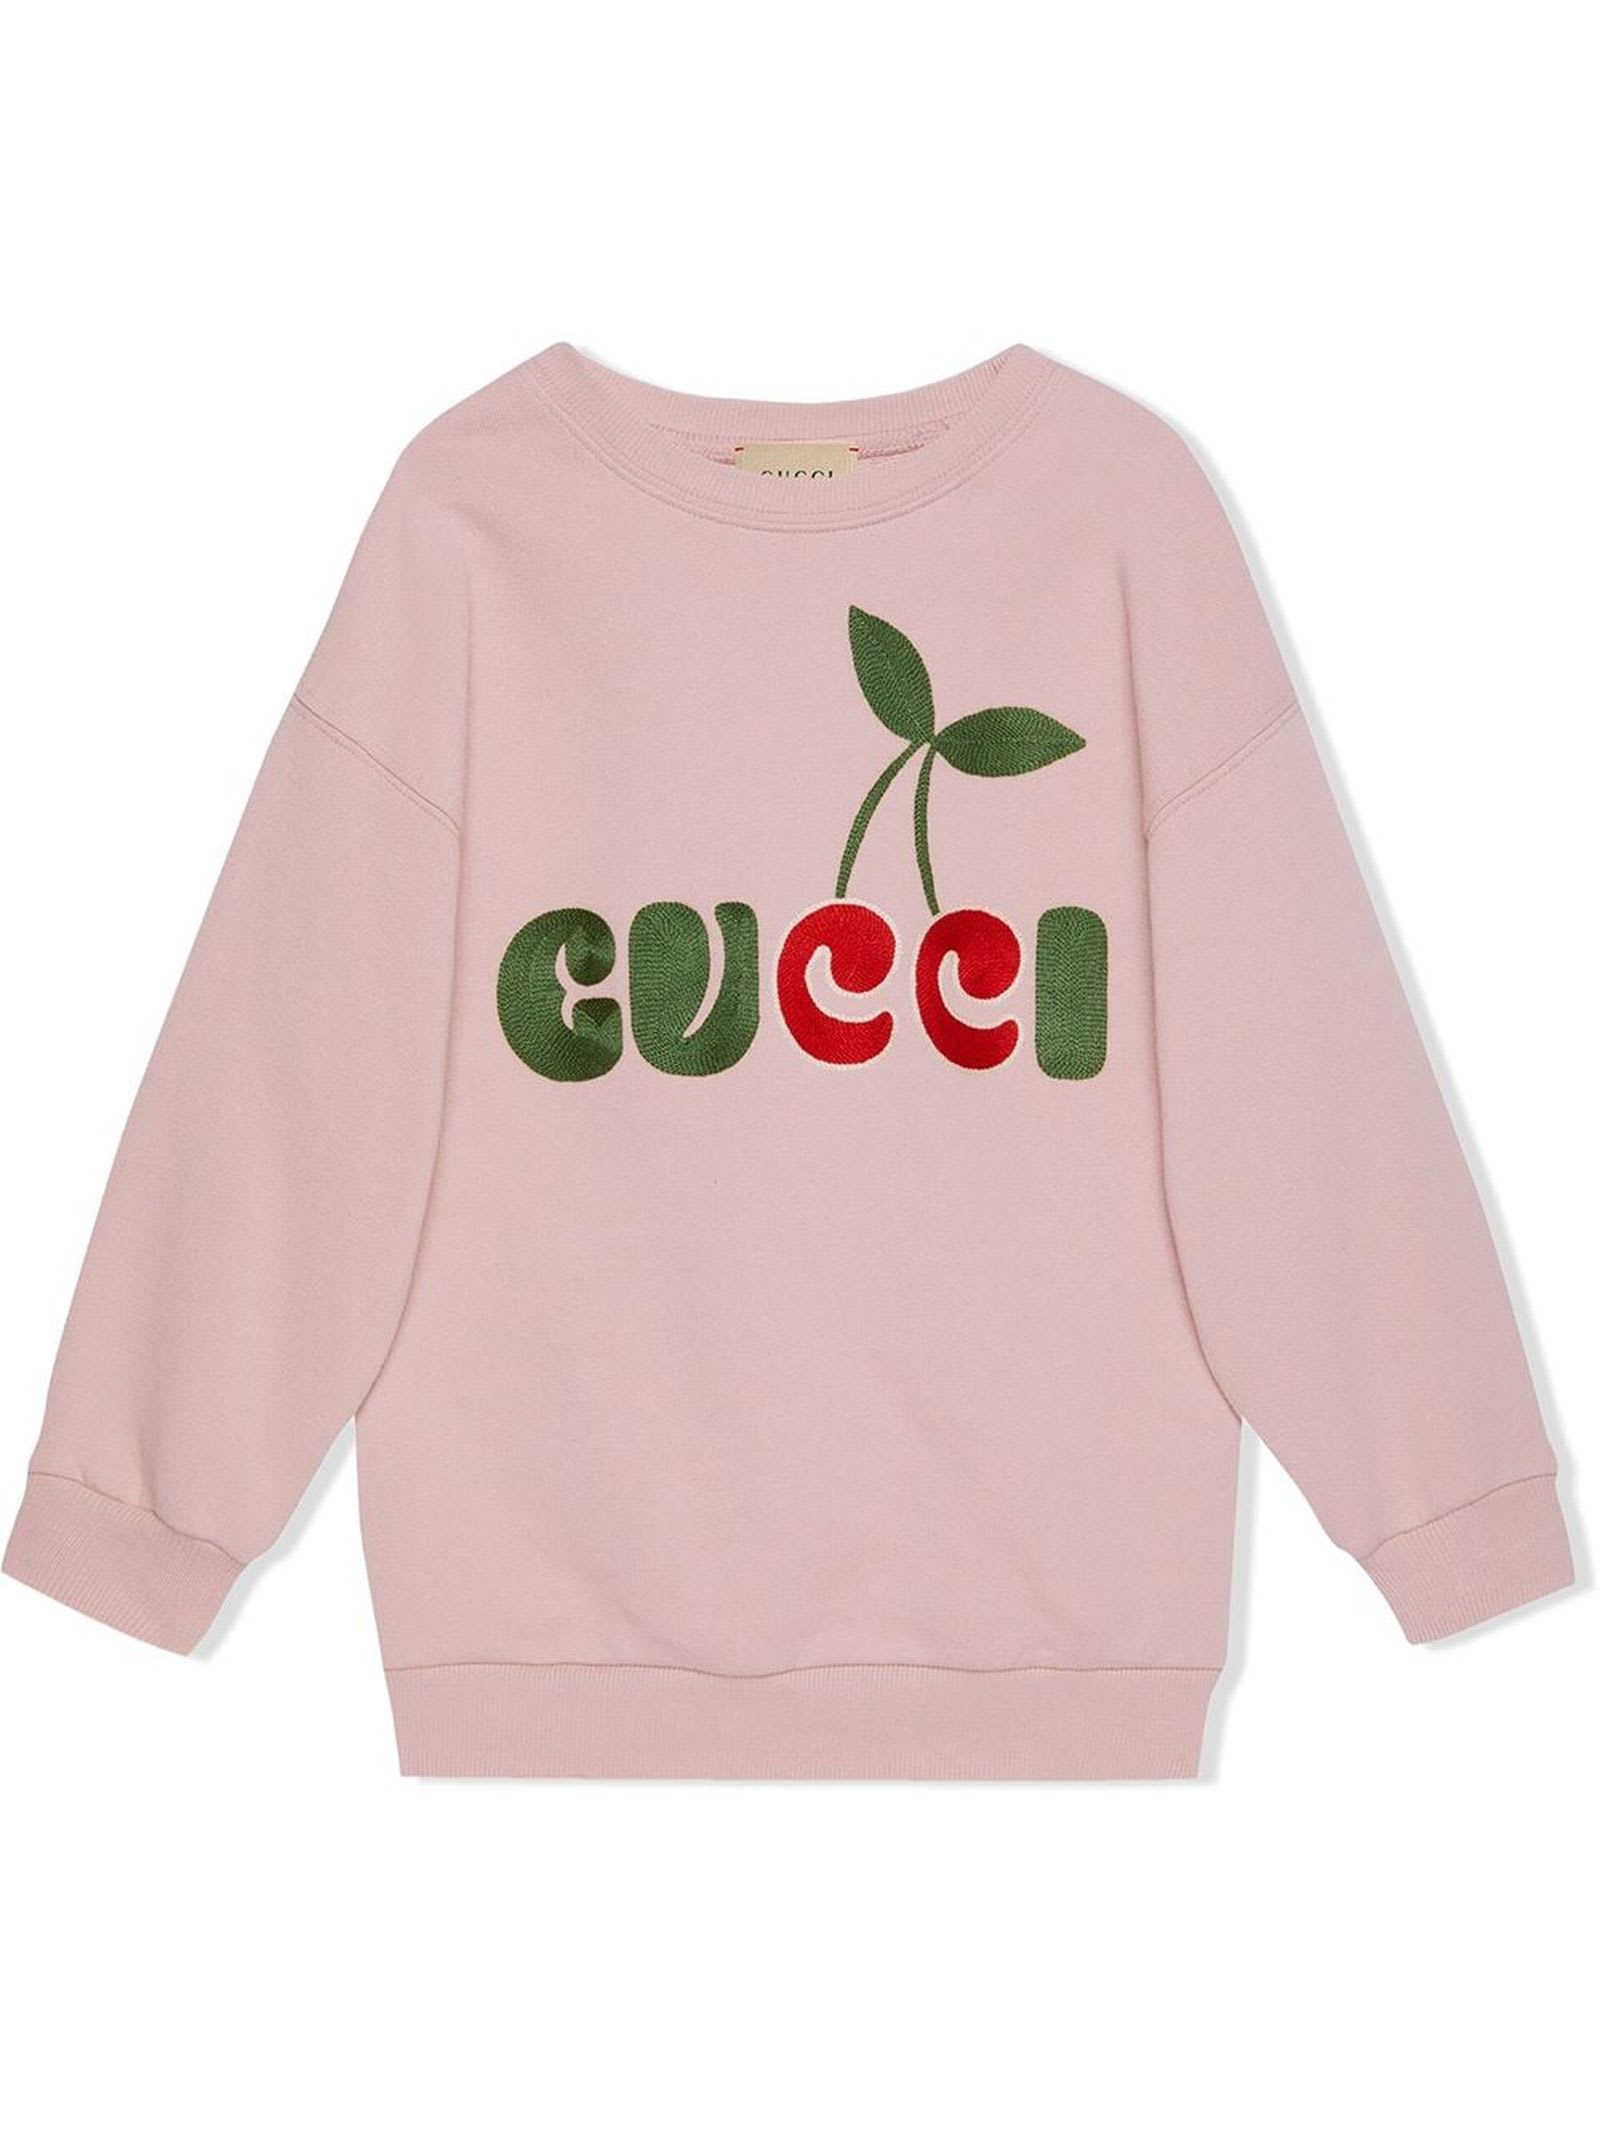 Gucci Childrens Gucci Cherry Print Cotton Dress